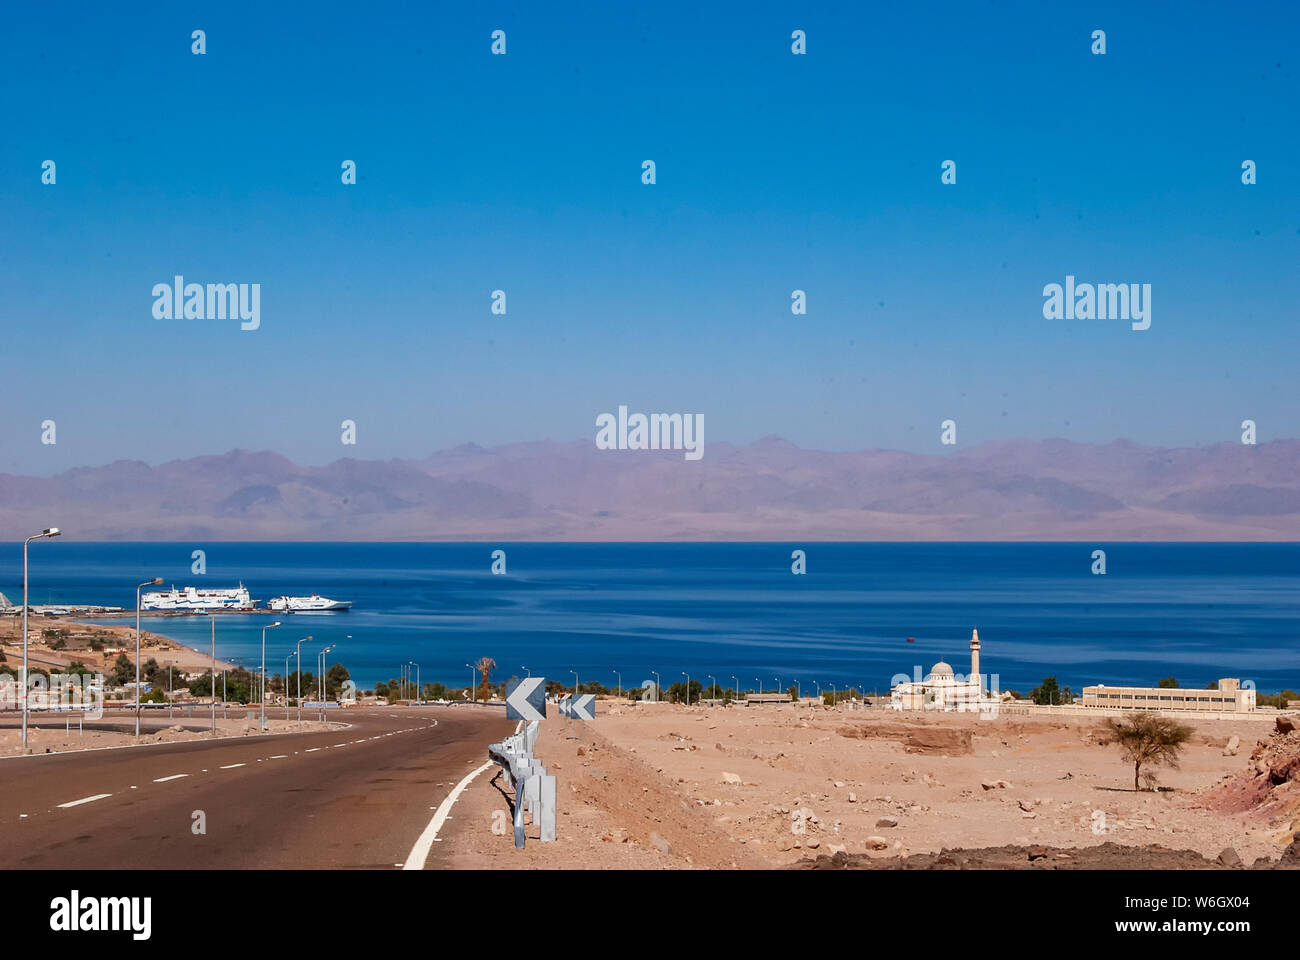 Overlooking the resort of Nuweiba in the Sinai Peninsula, Egypt Stock Photo